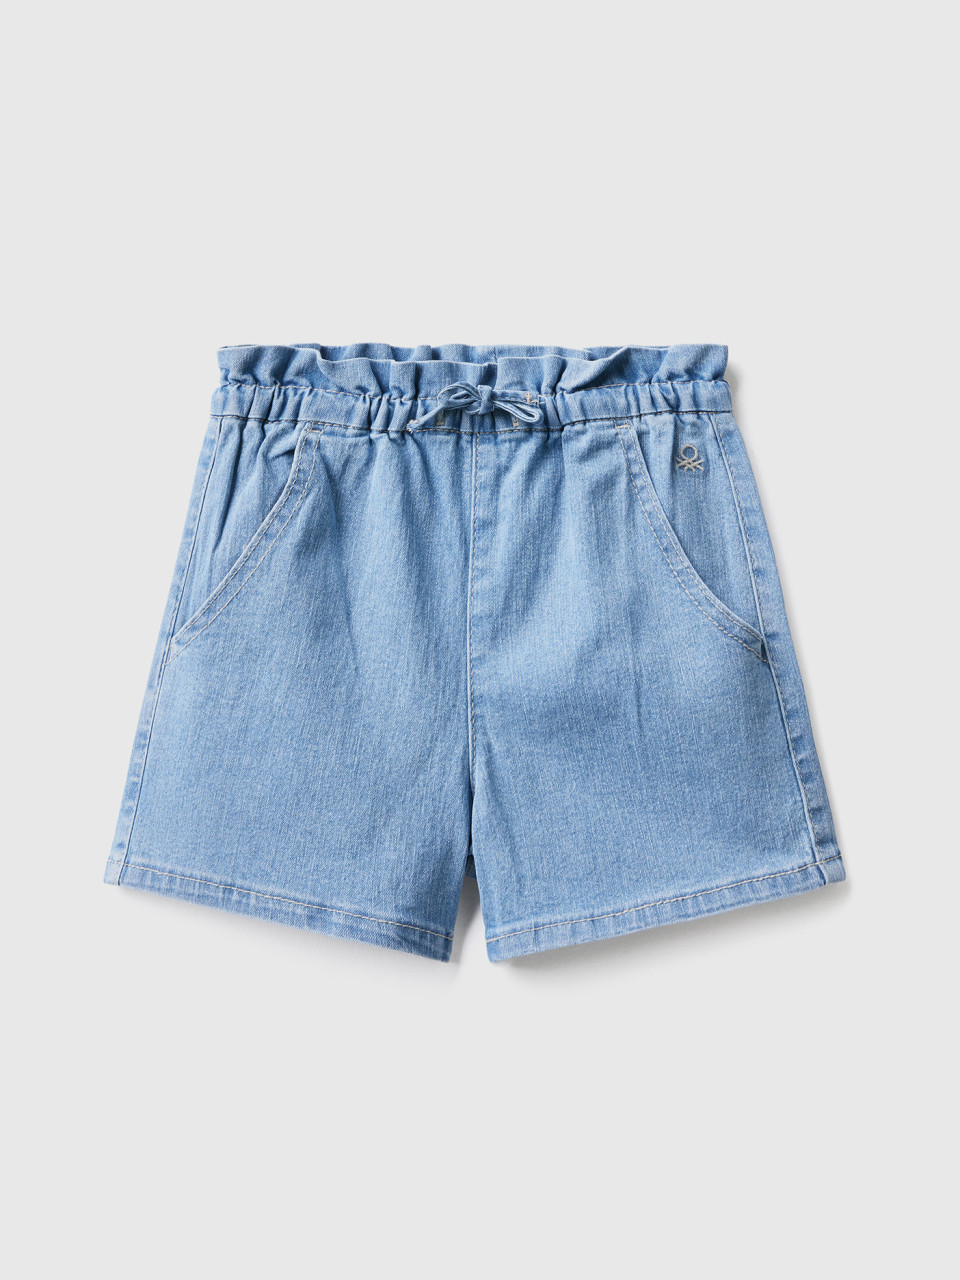 Benetton, Paperbag-shorts Aus Denim eco-recycle, Azurblau, female